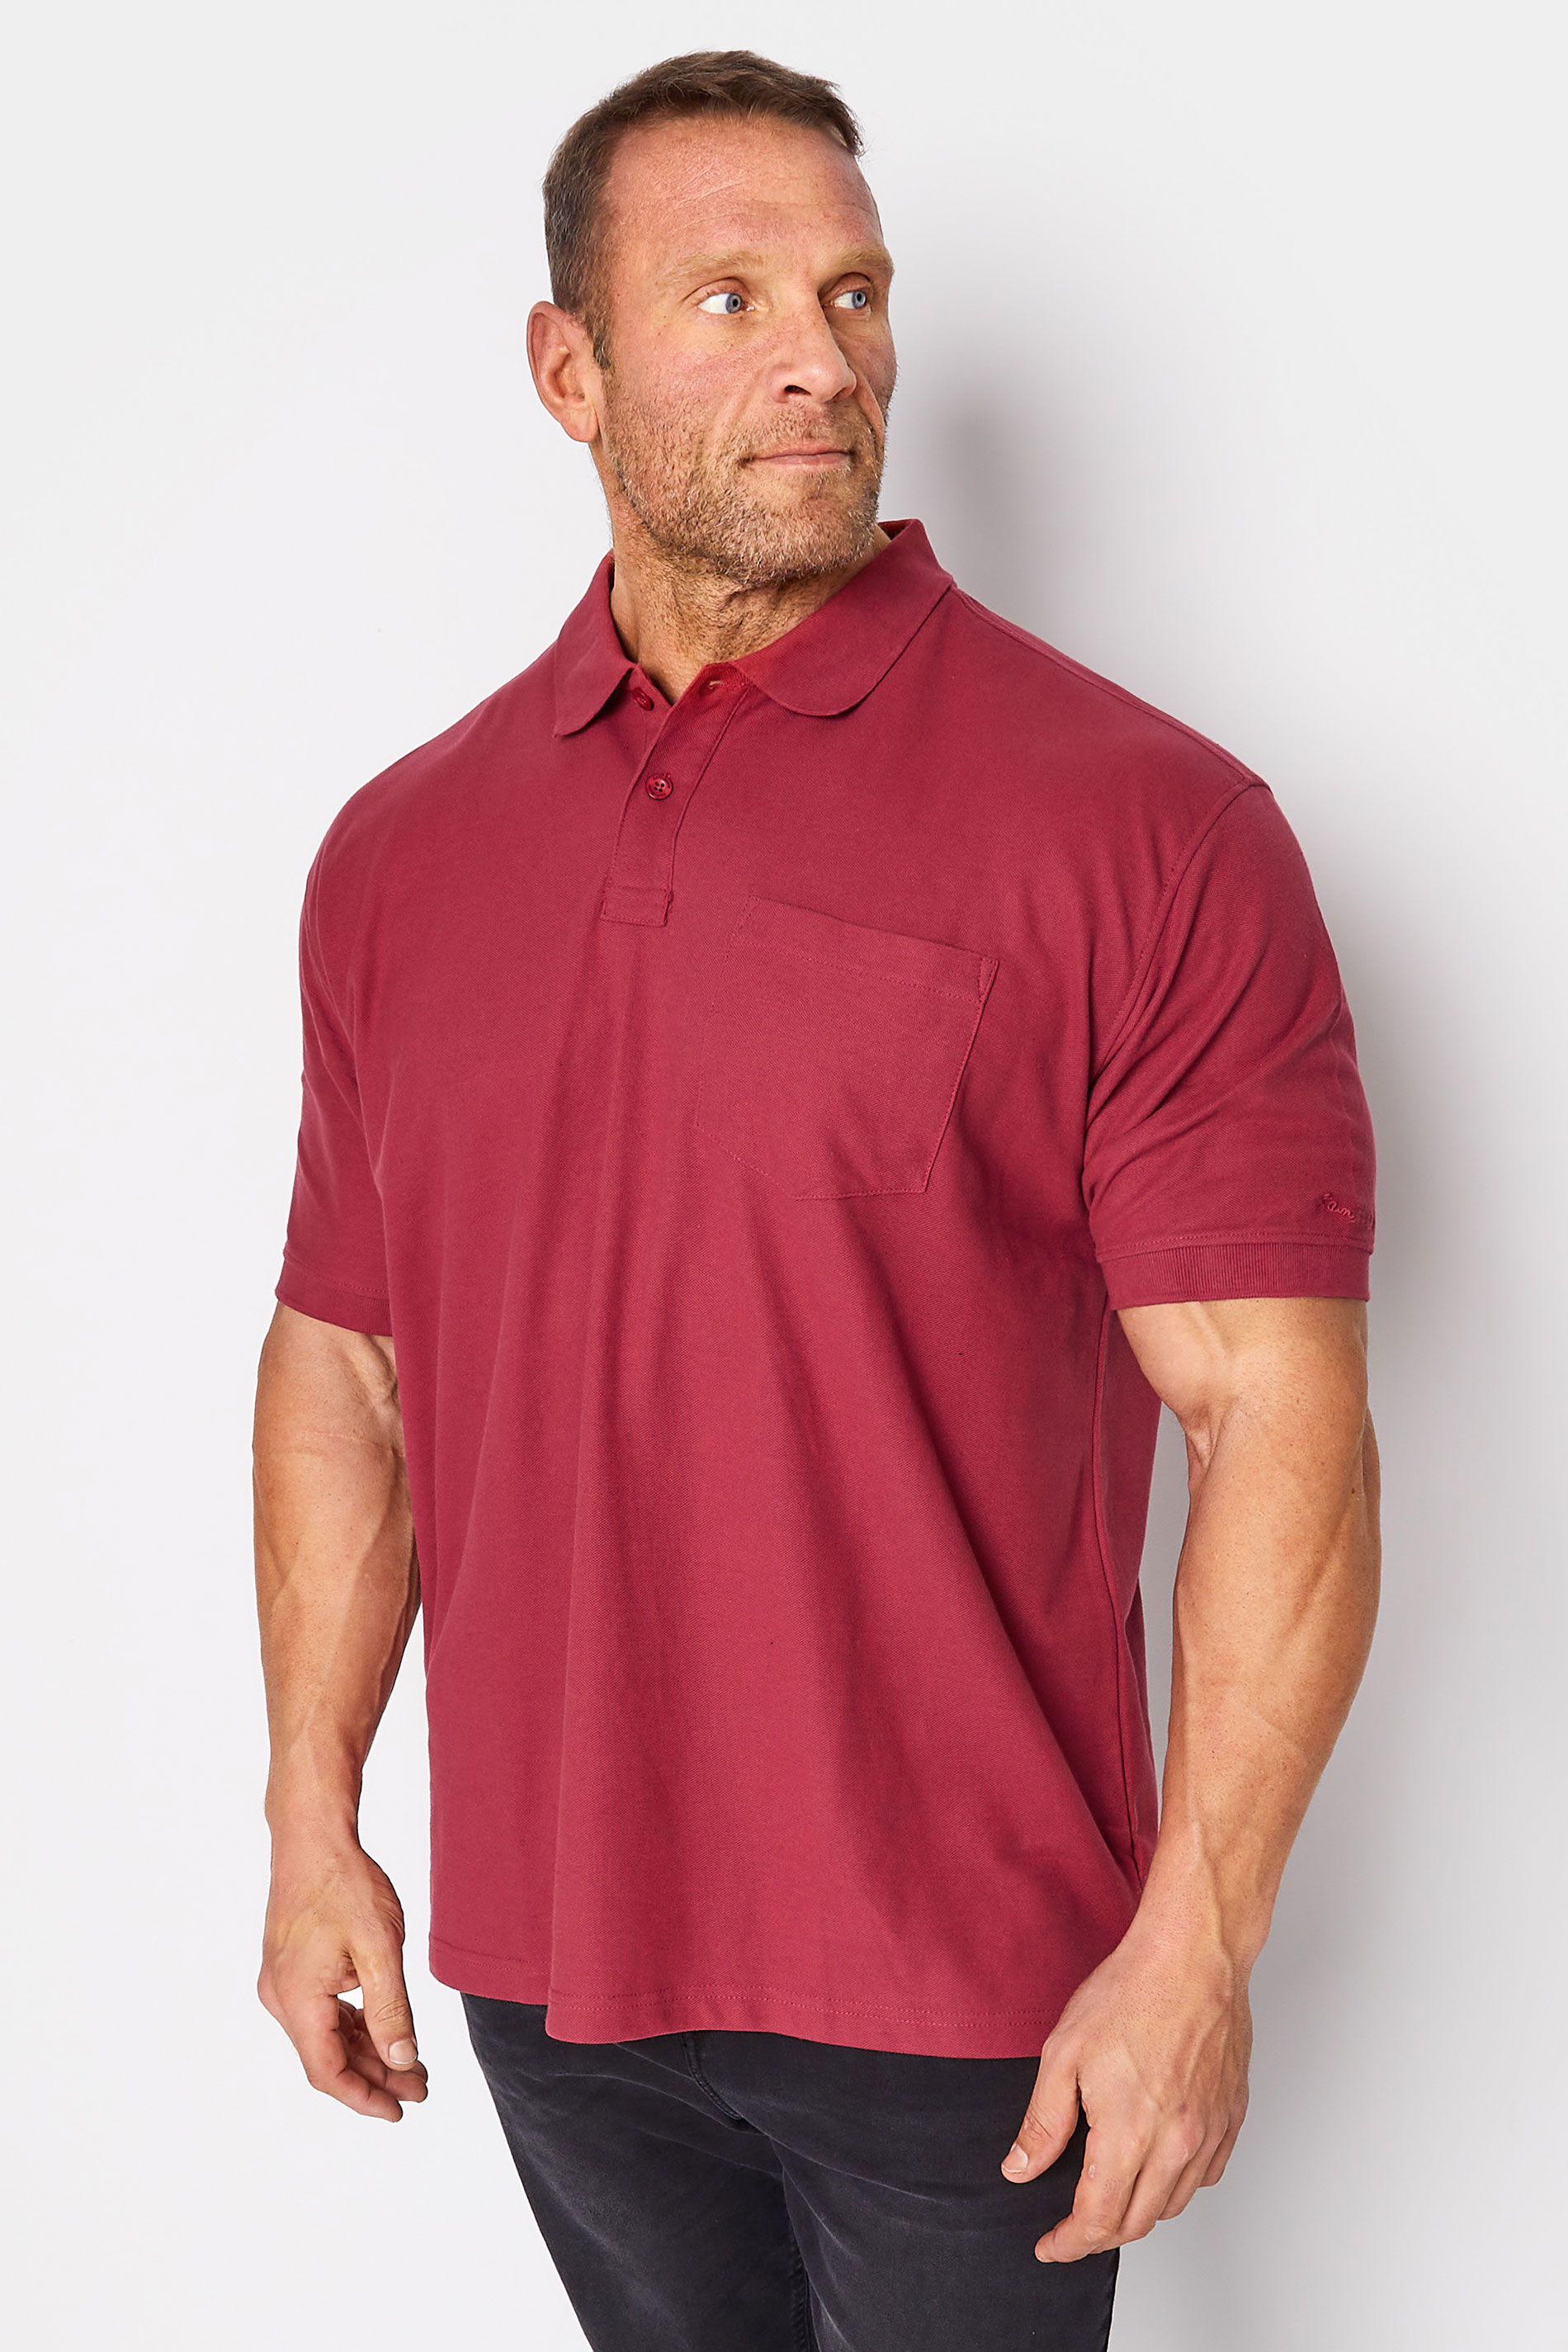 KAM Big & Tall Red Pocket Polo Shirt 1